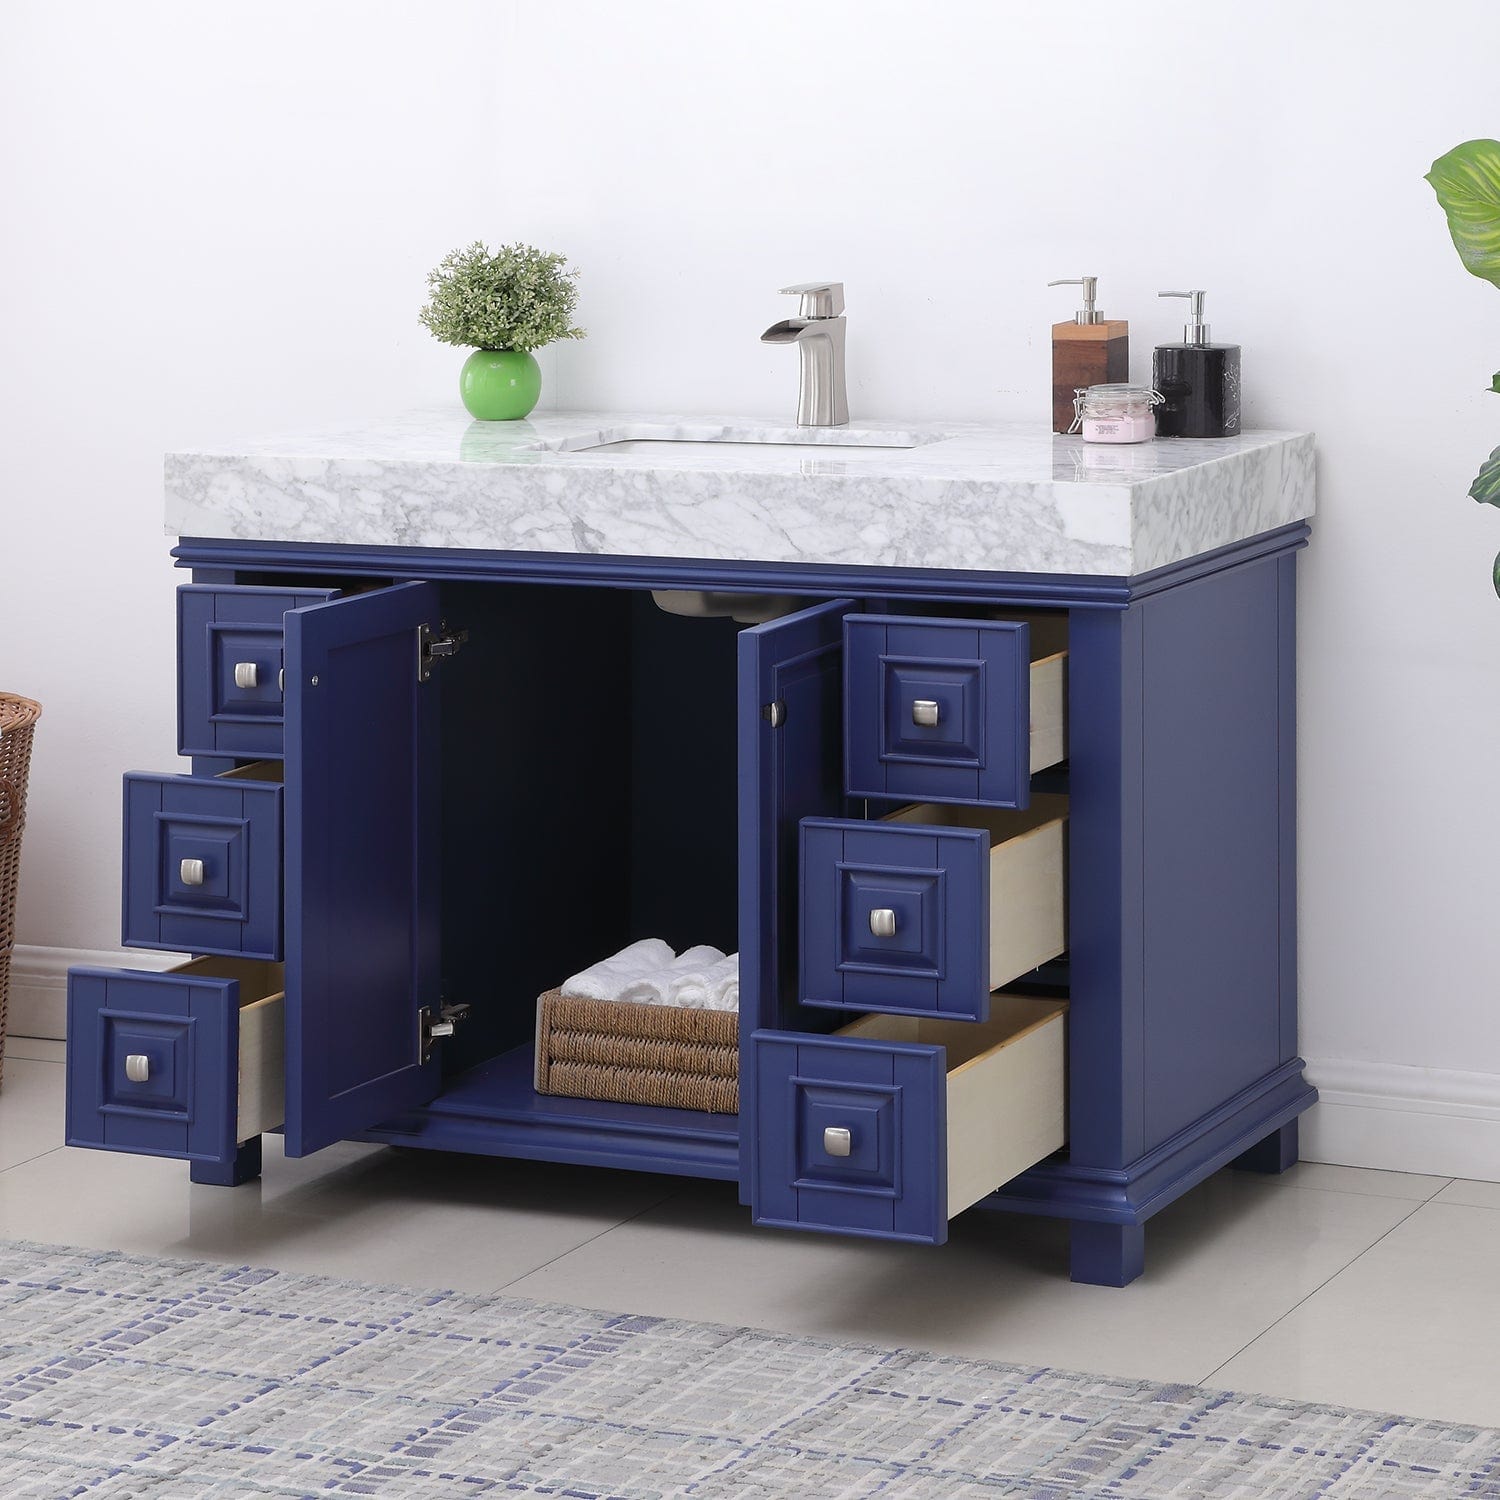 Altair Jardin 48" Single Bathroom Vanity Set in Jewelry Blue and Carrara White Marble Countertop without Mirror 539048-JB-CA-NM - Molaix631112971003Vanity539048-JB-CA-NM